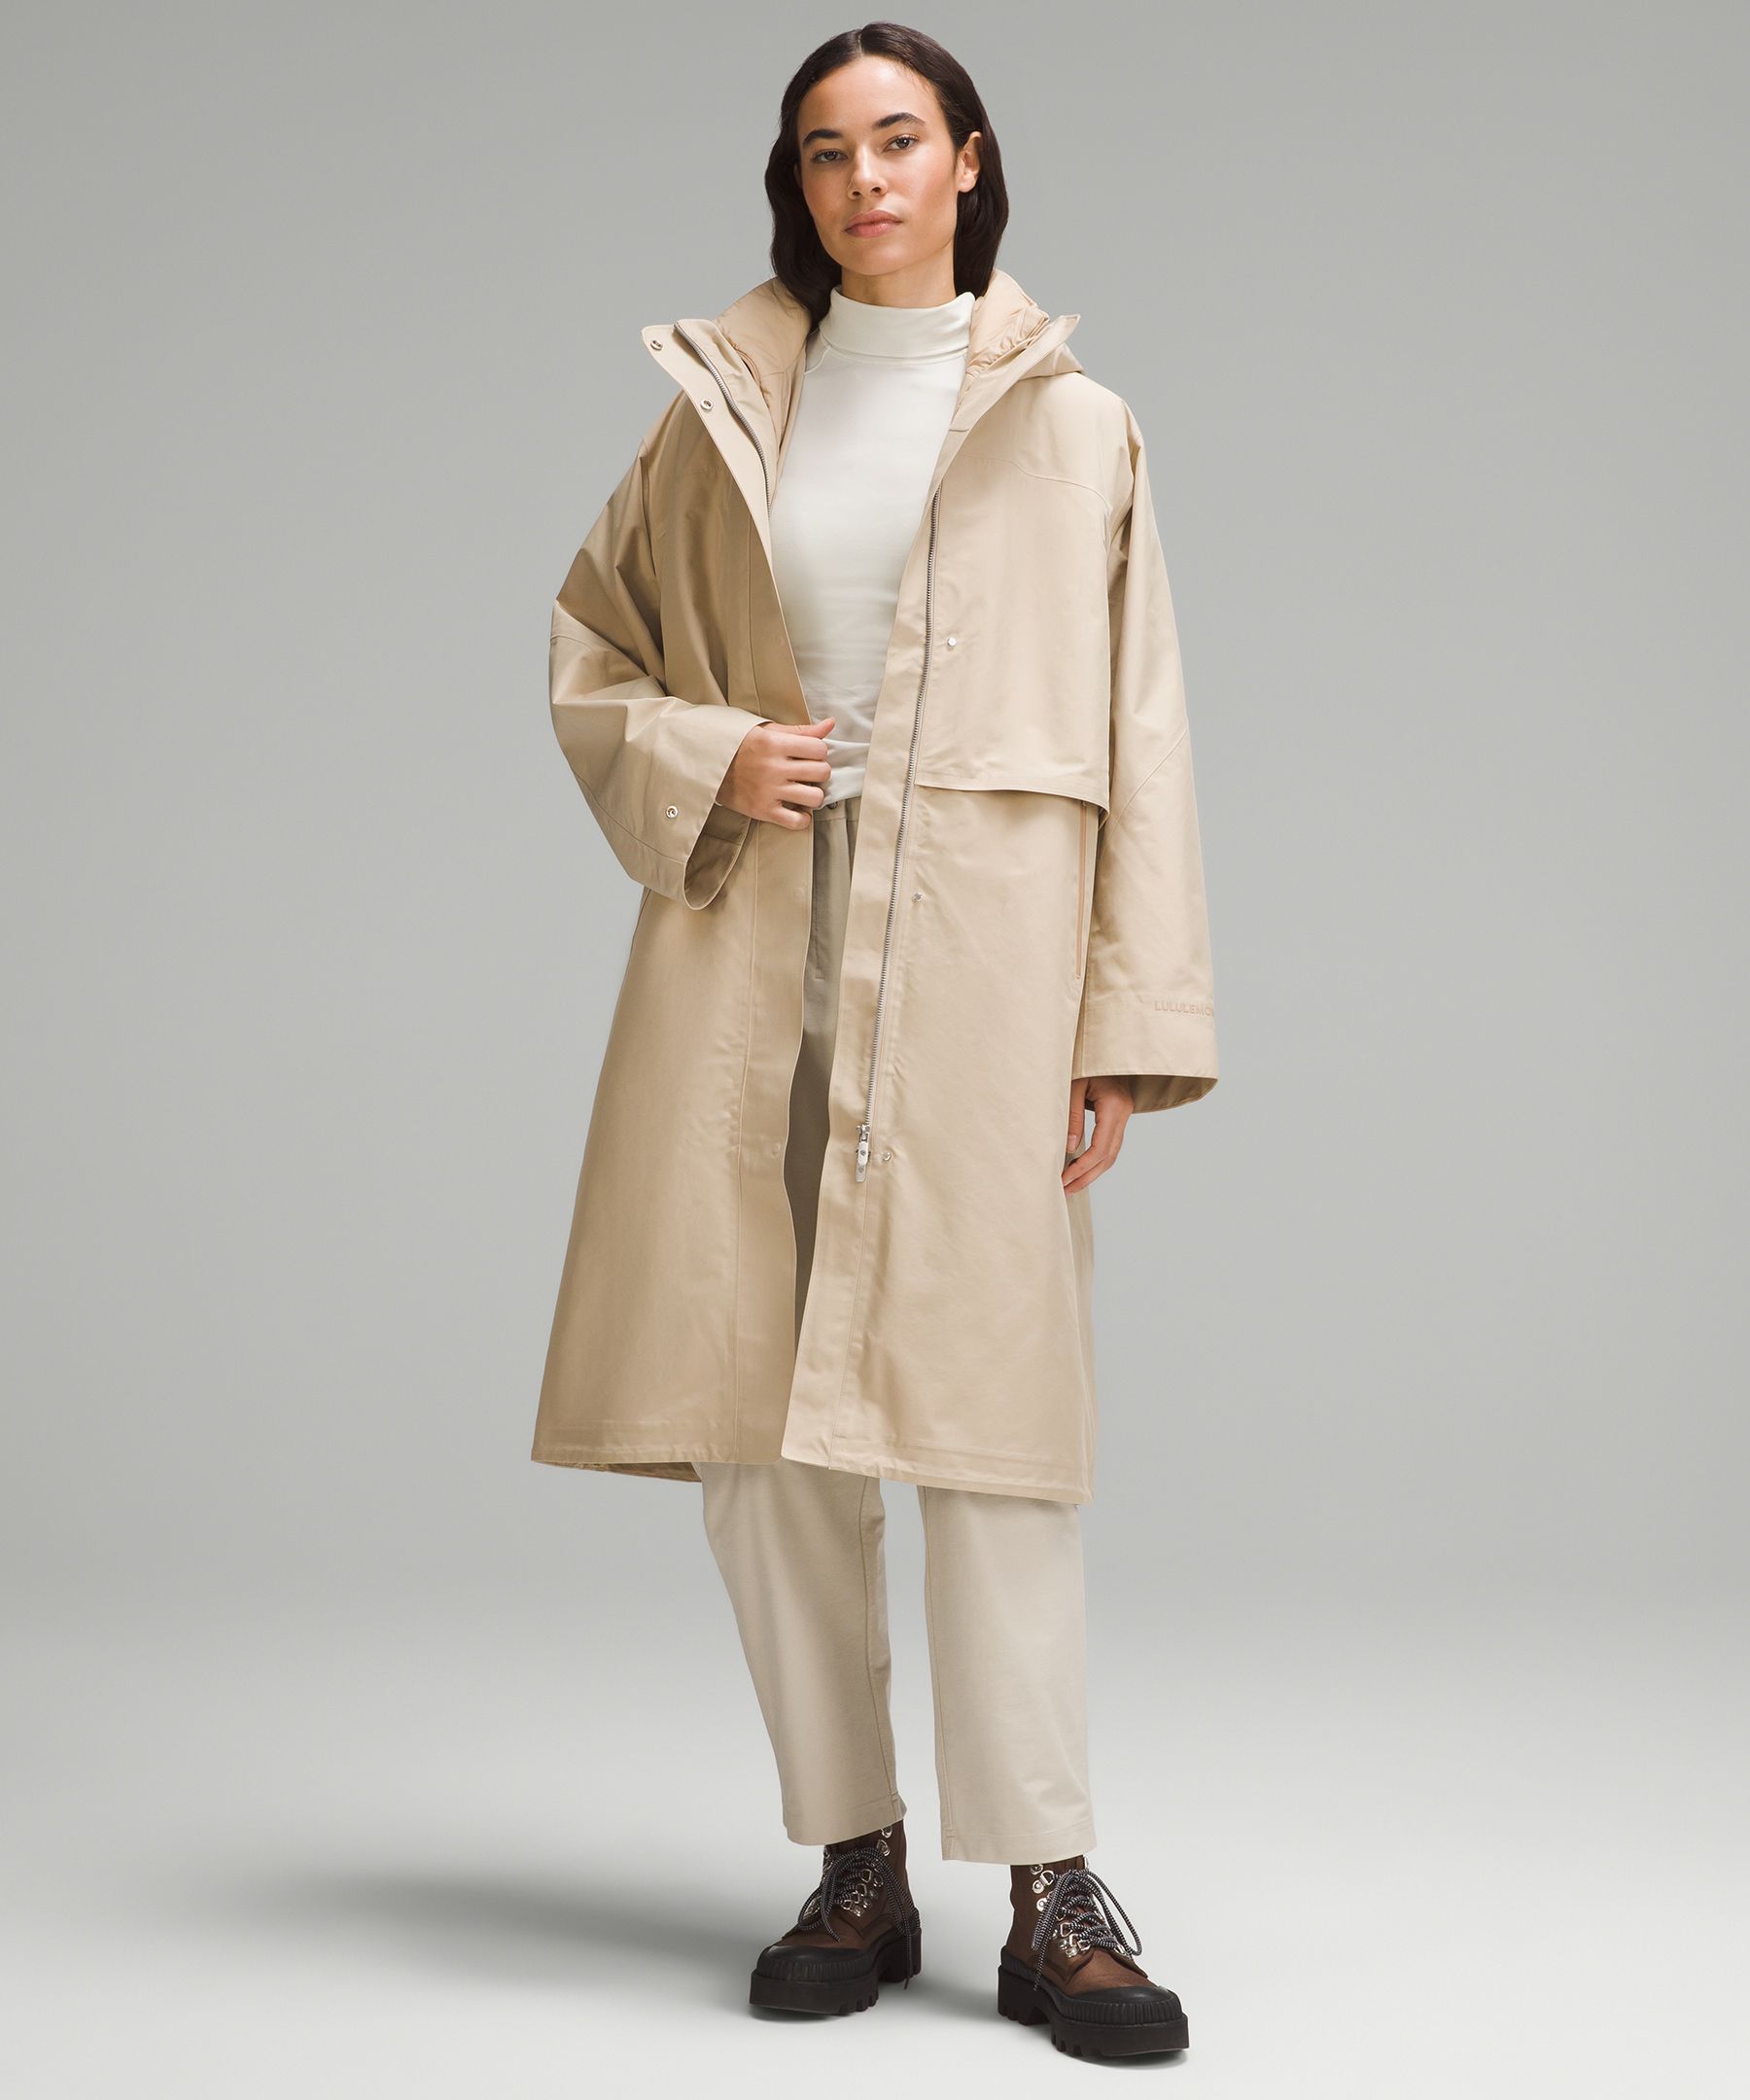 Lululemon 3-in-1 Insulated Rain Coat